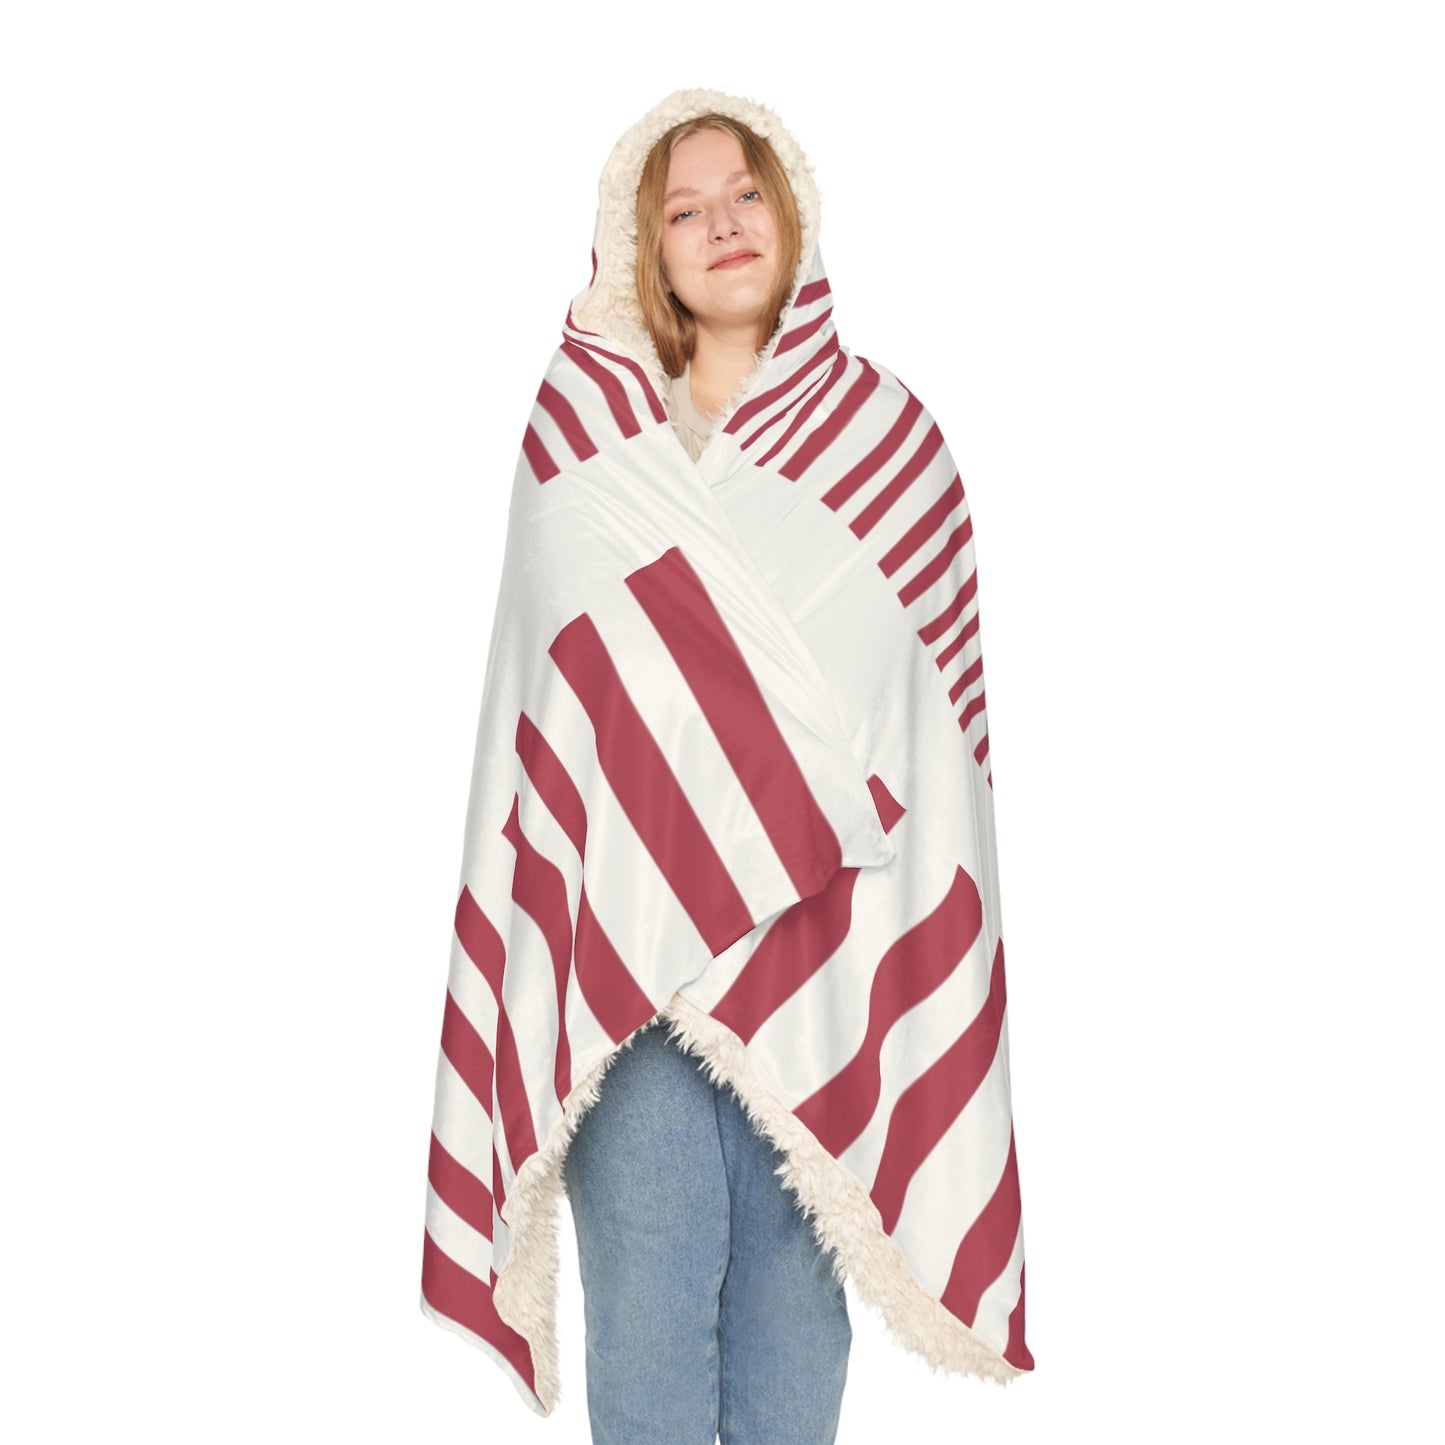 Grace & Mercy Snuggle Blanket